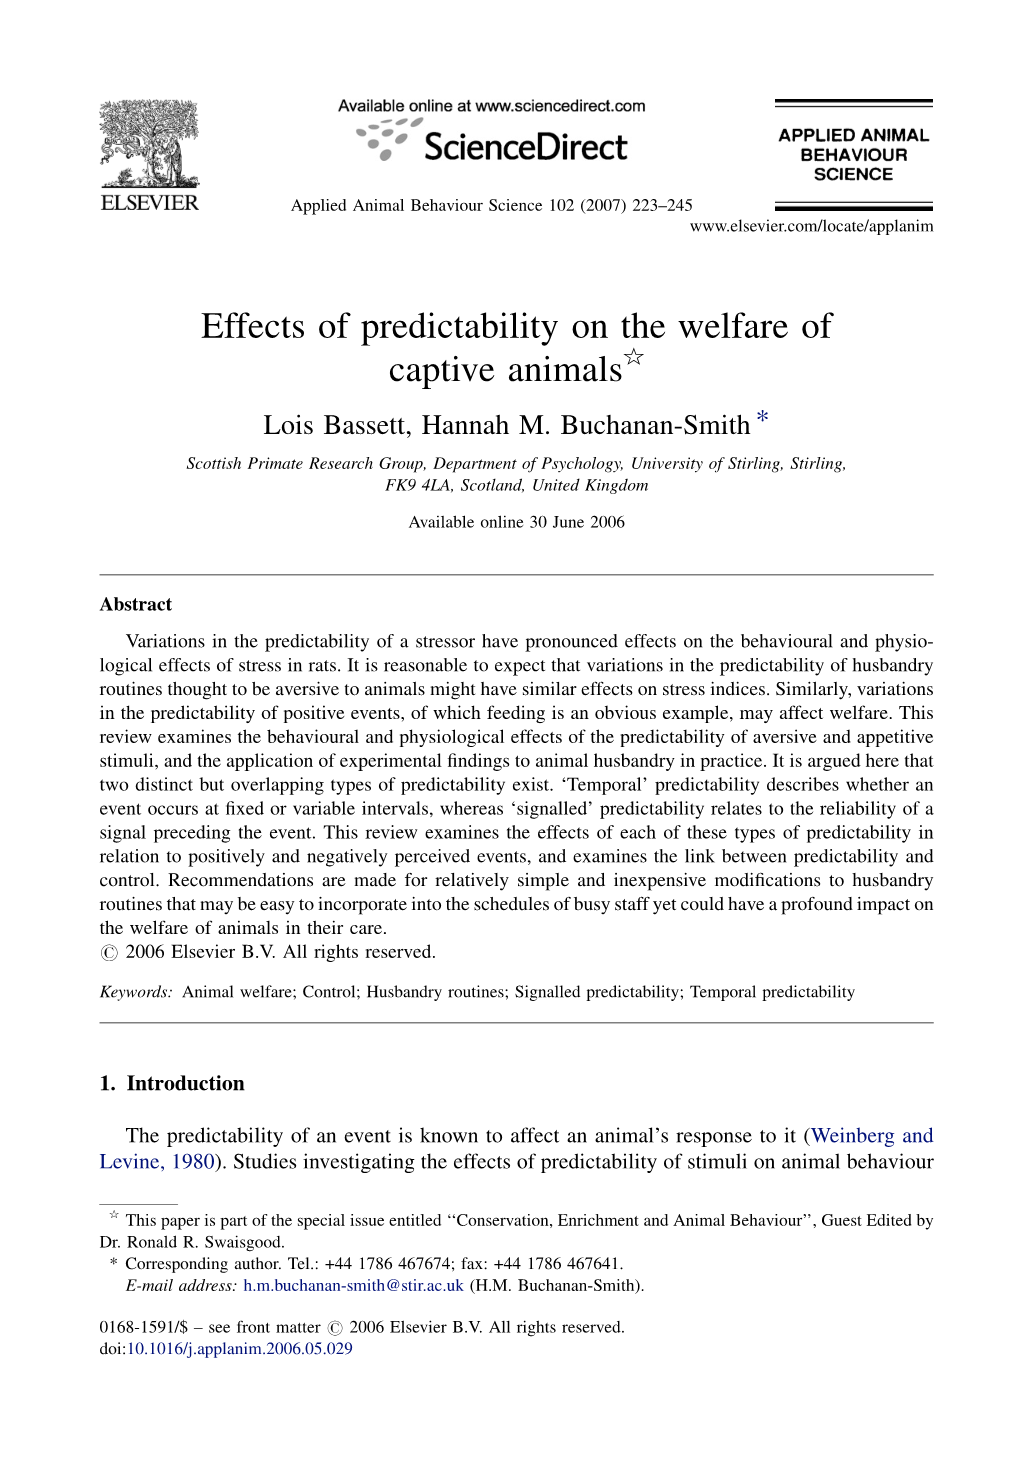 Effects of Predictability on the Welfare of Captive Animals§ Lois Bassett, Hannah M